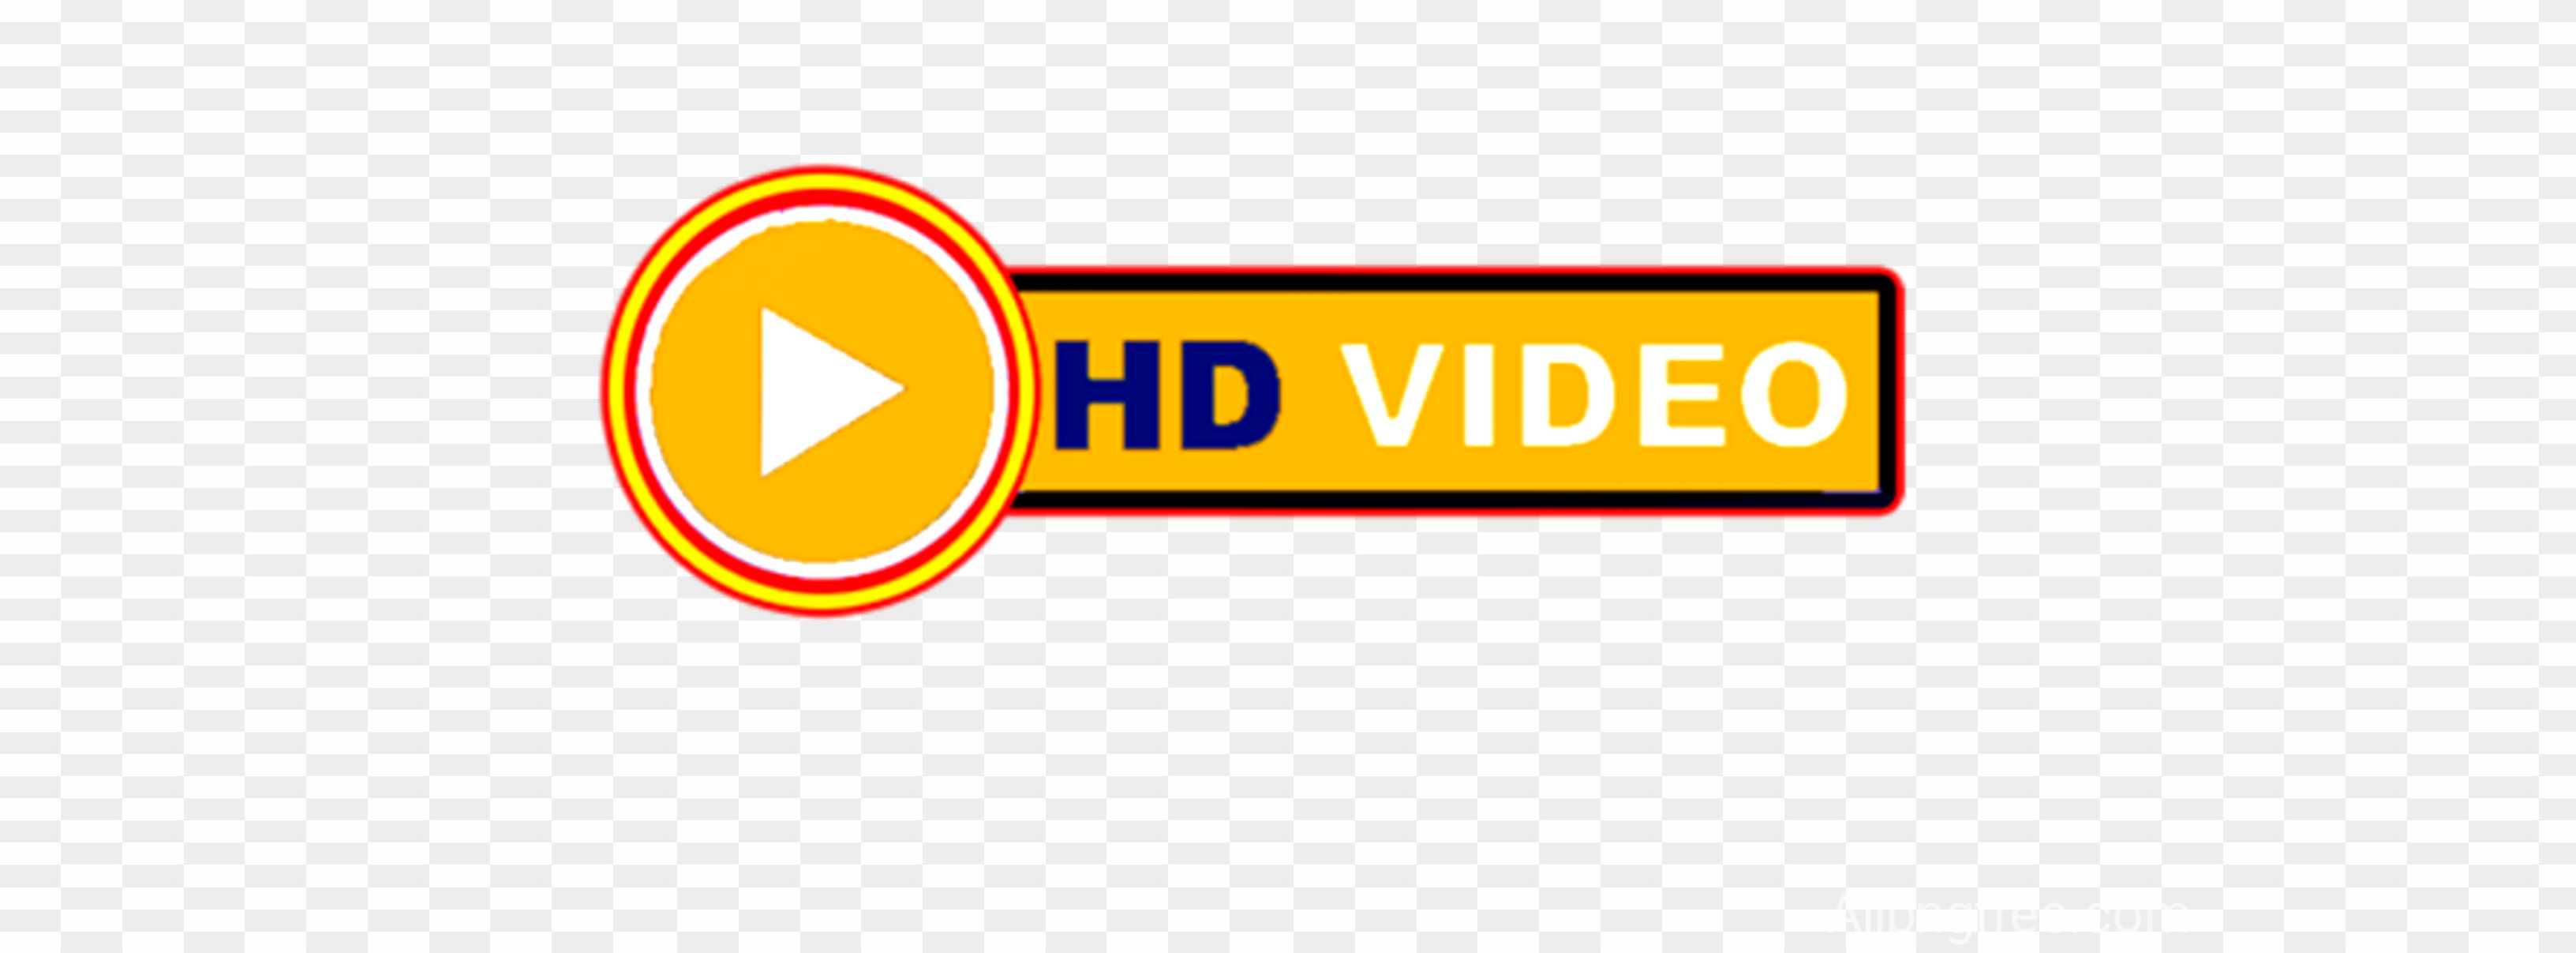 Hd video logo PNG image Download